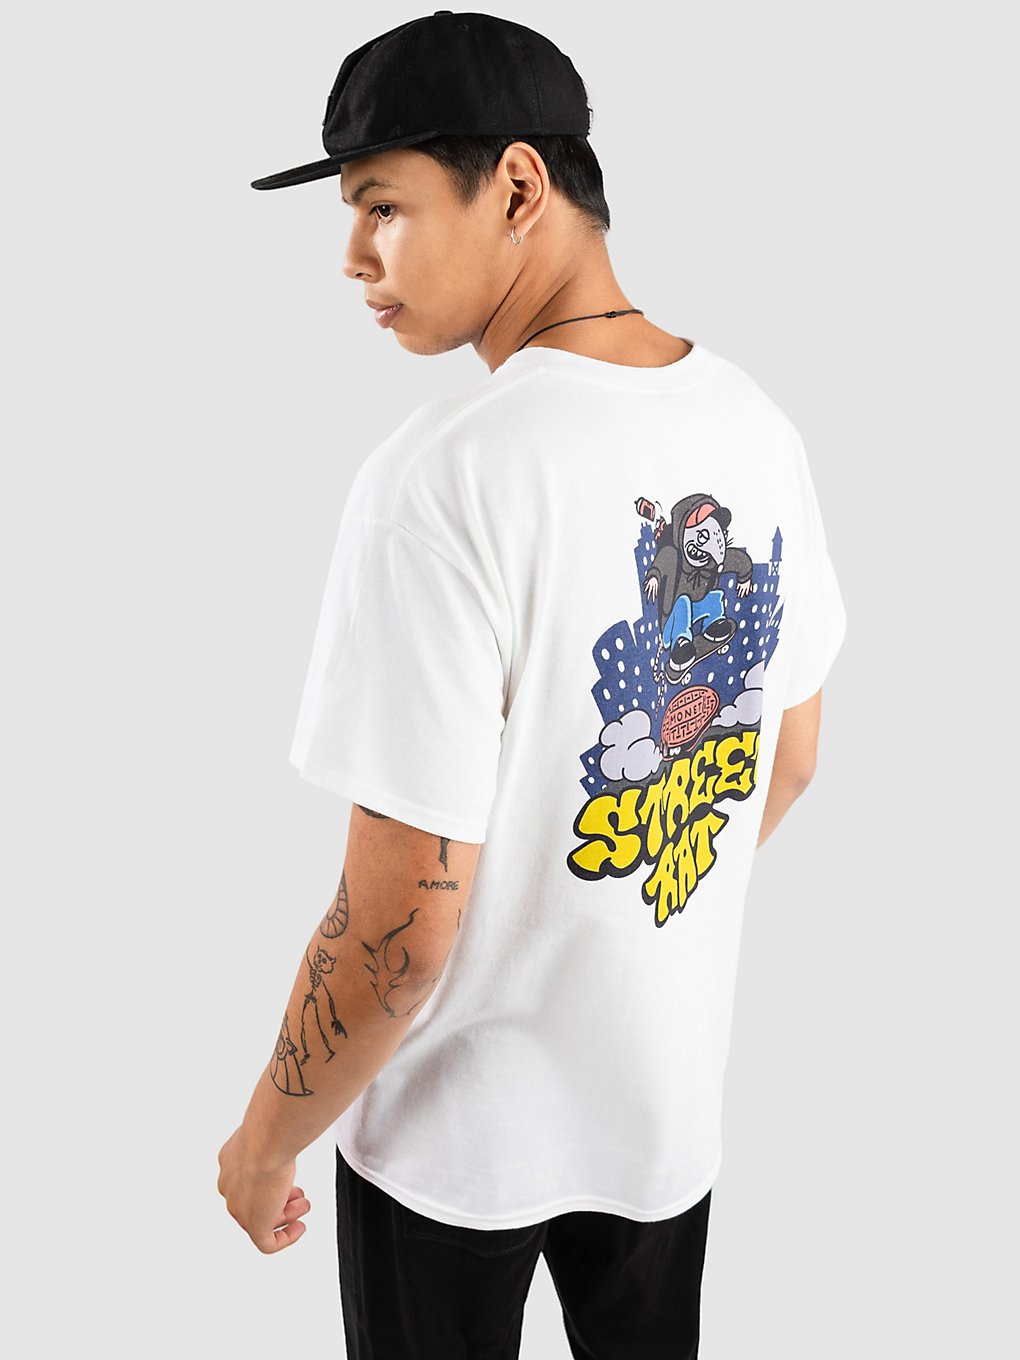 Monet Skateboards Street Rat T-Shirt white kaufen